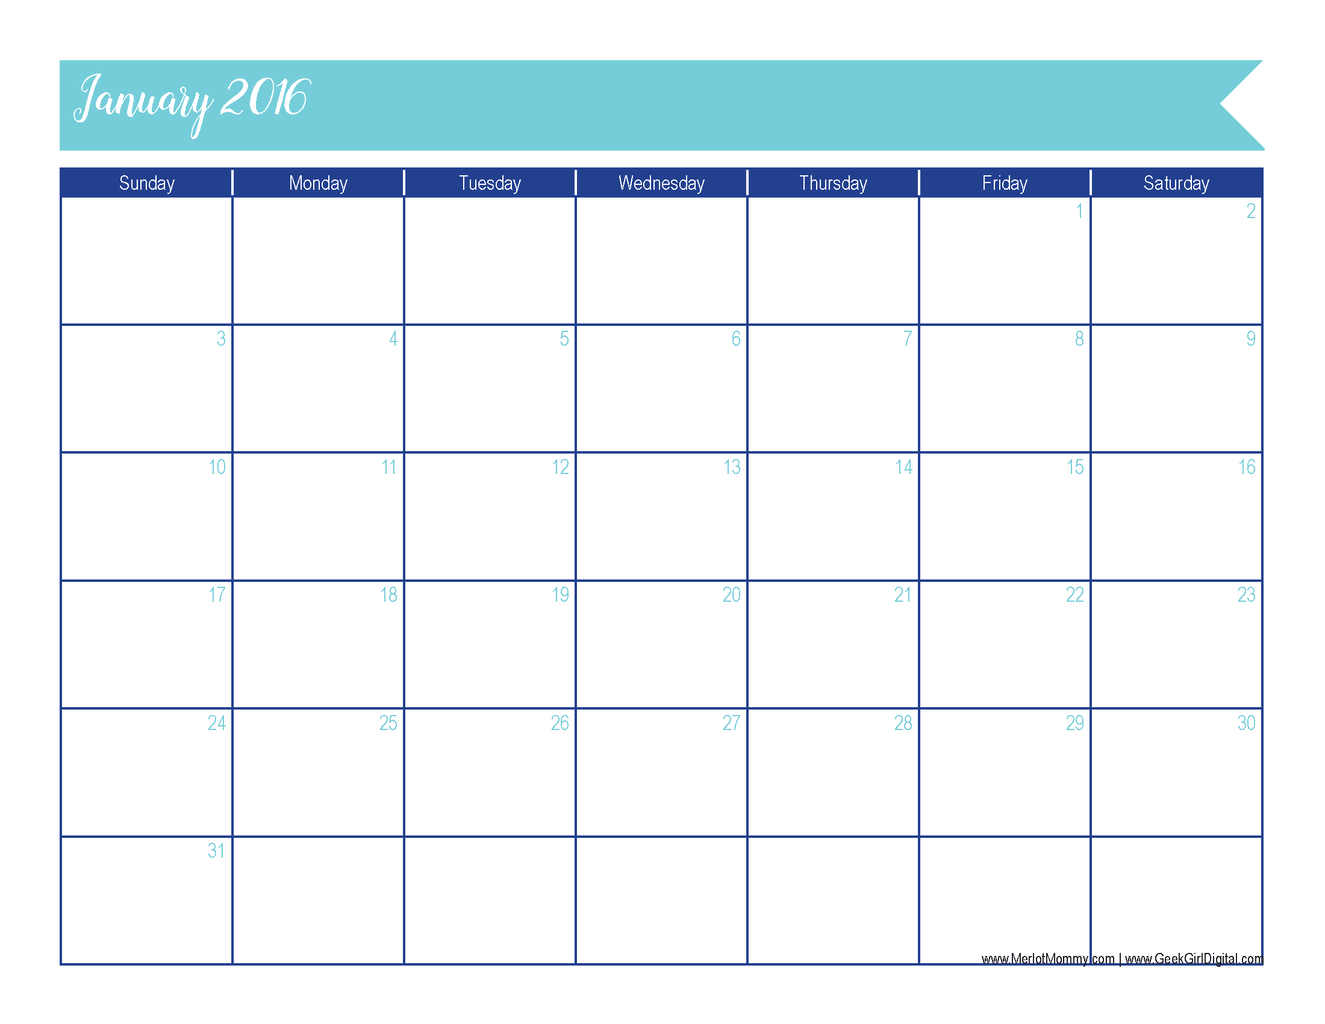 January 2016 Calendar: 30 Days of Free Printables